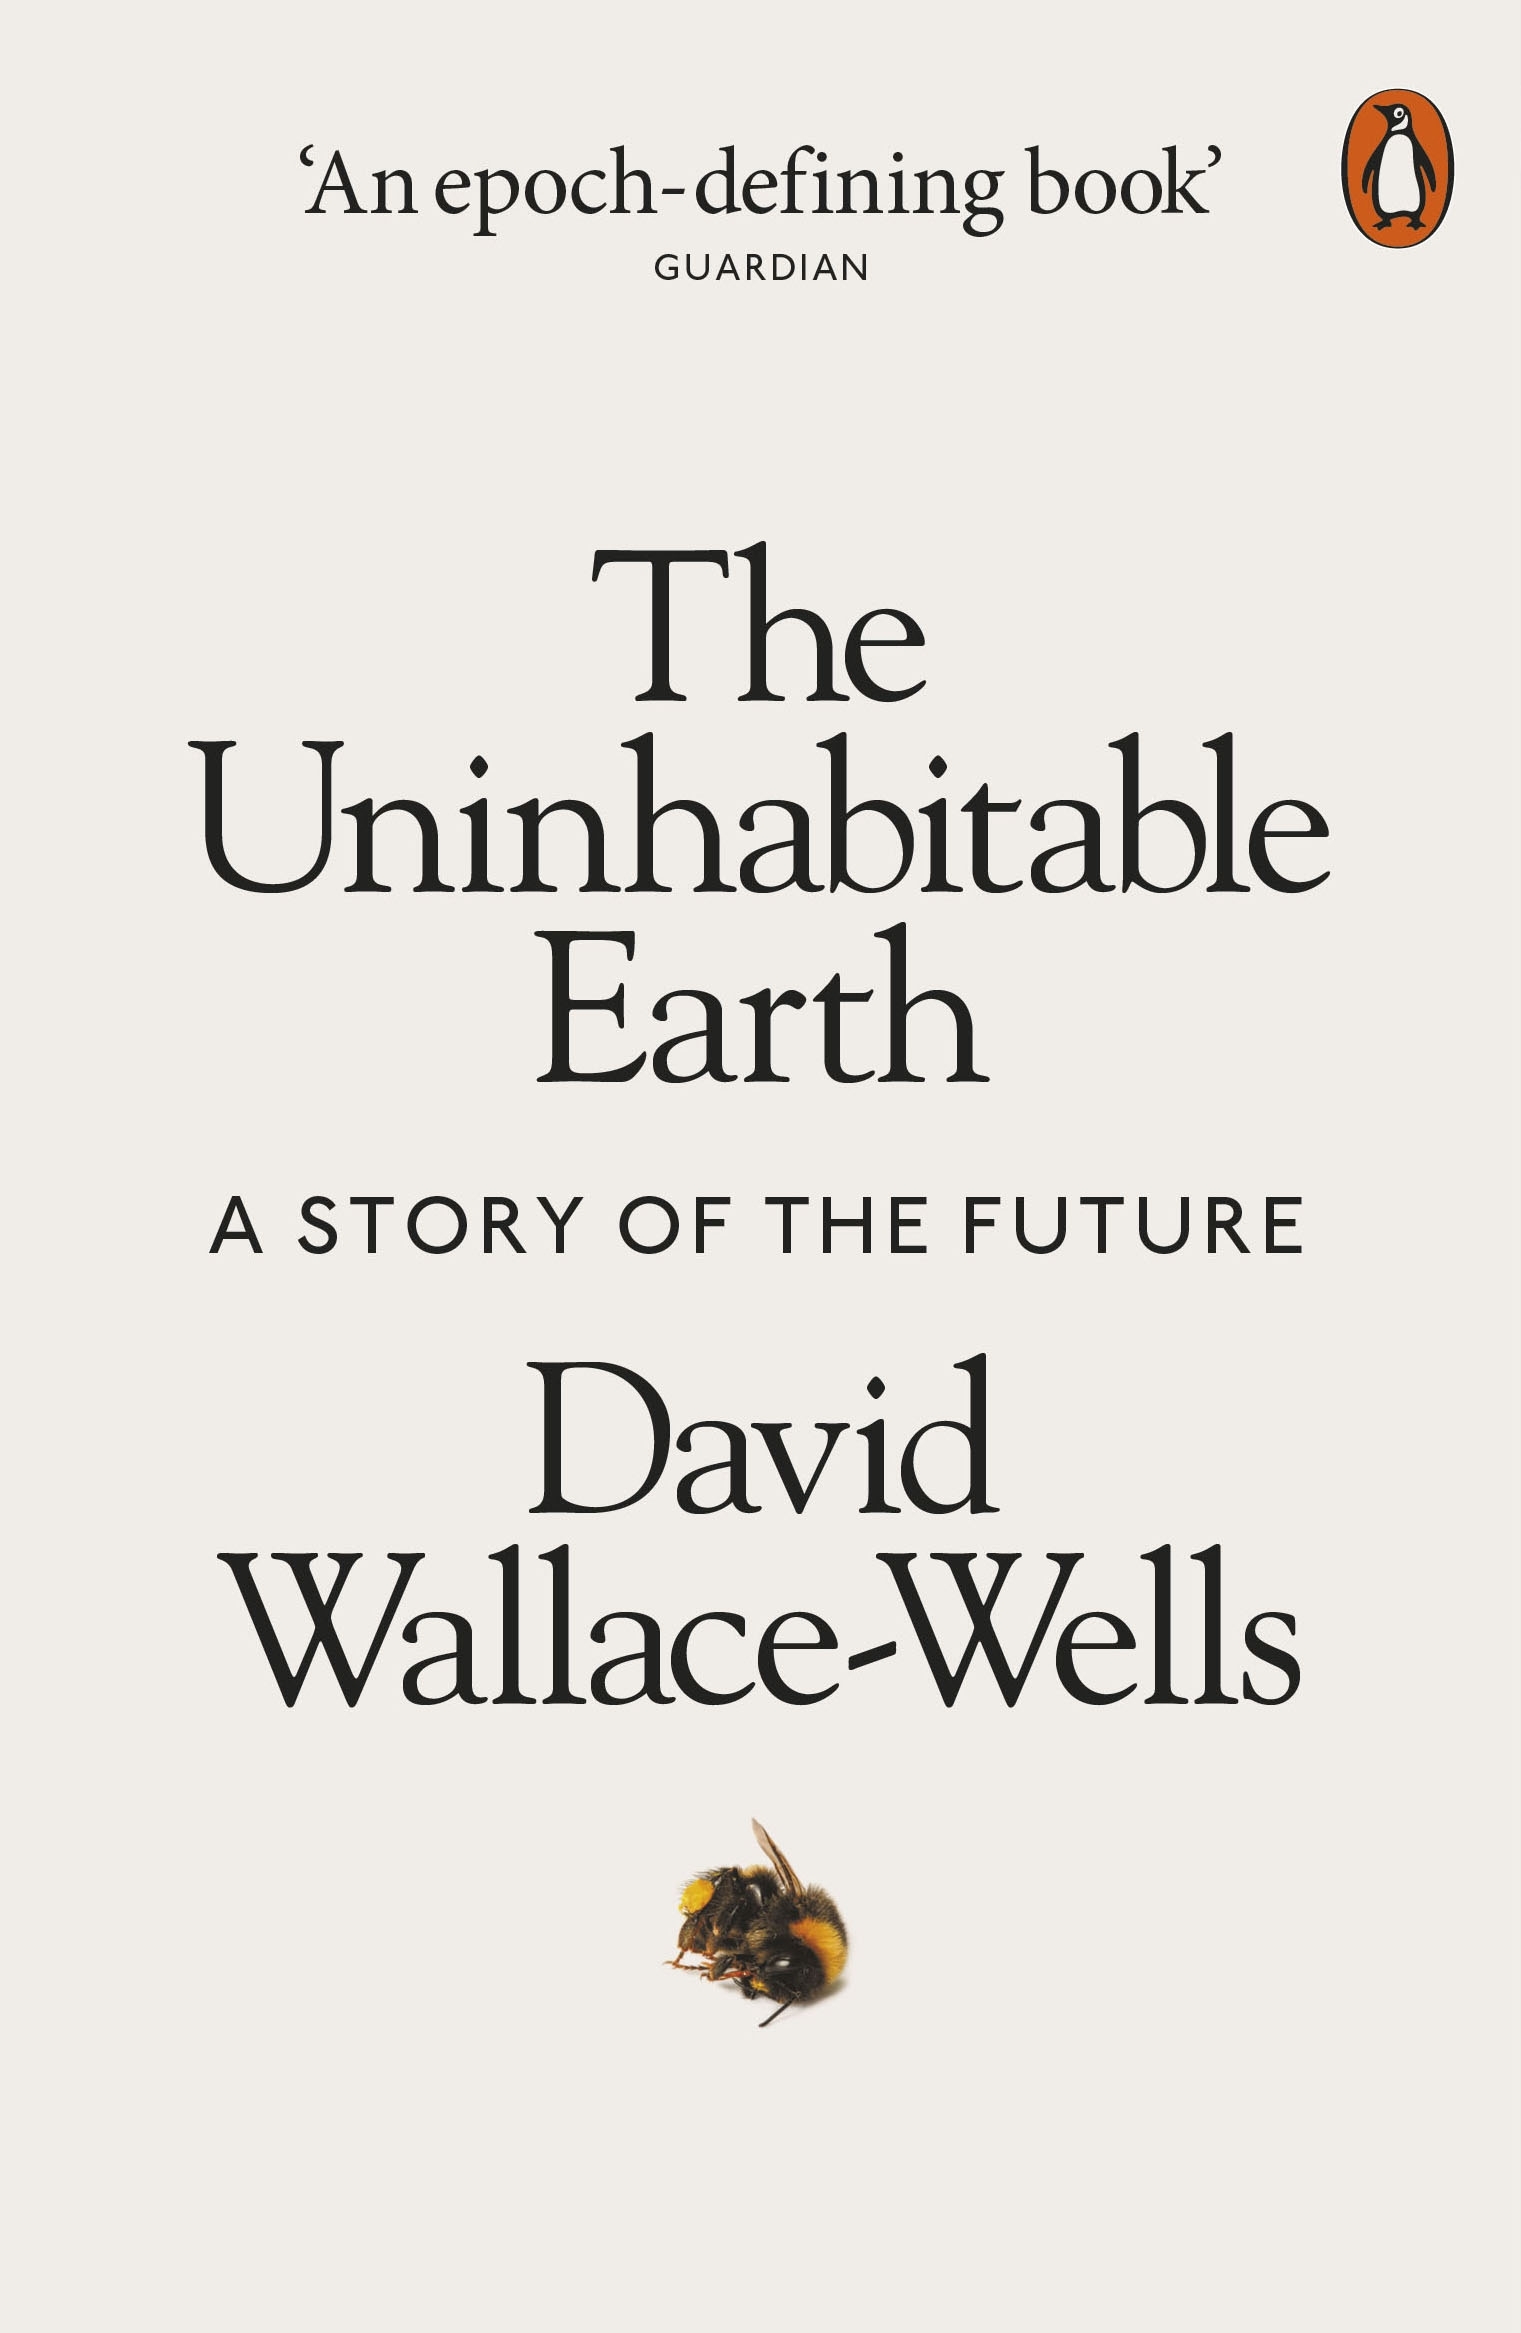 The Uninhabitable Earth by David Wallace-Wells - Penguin Books Australia